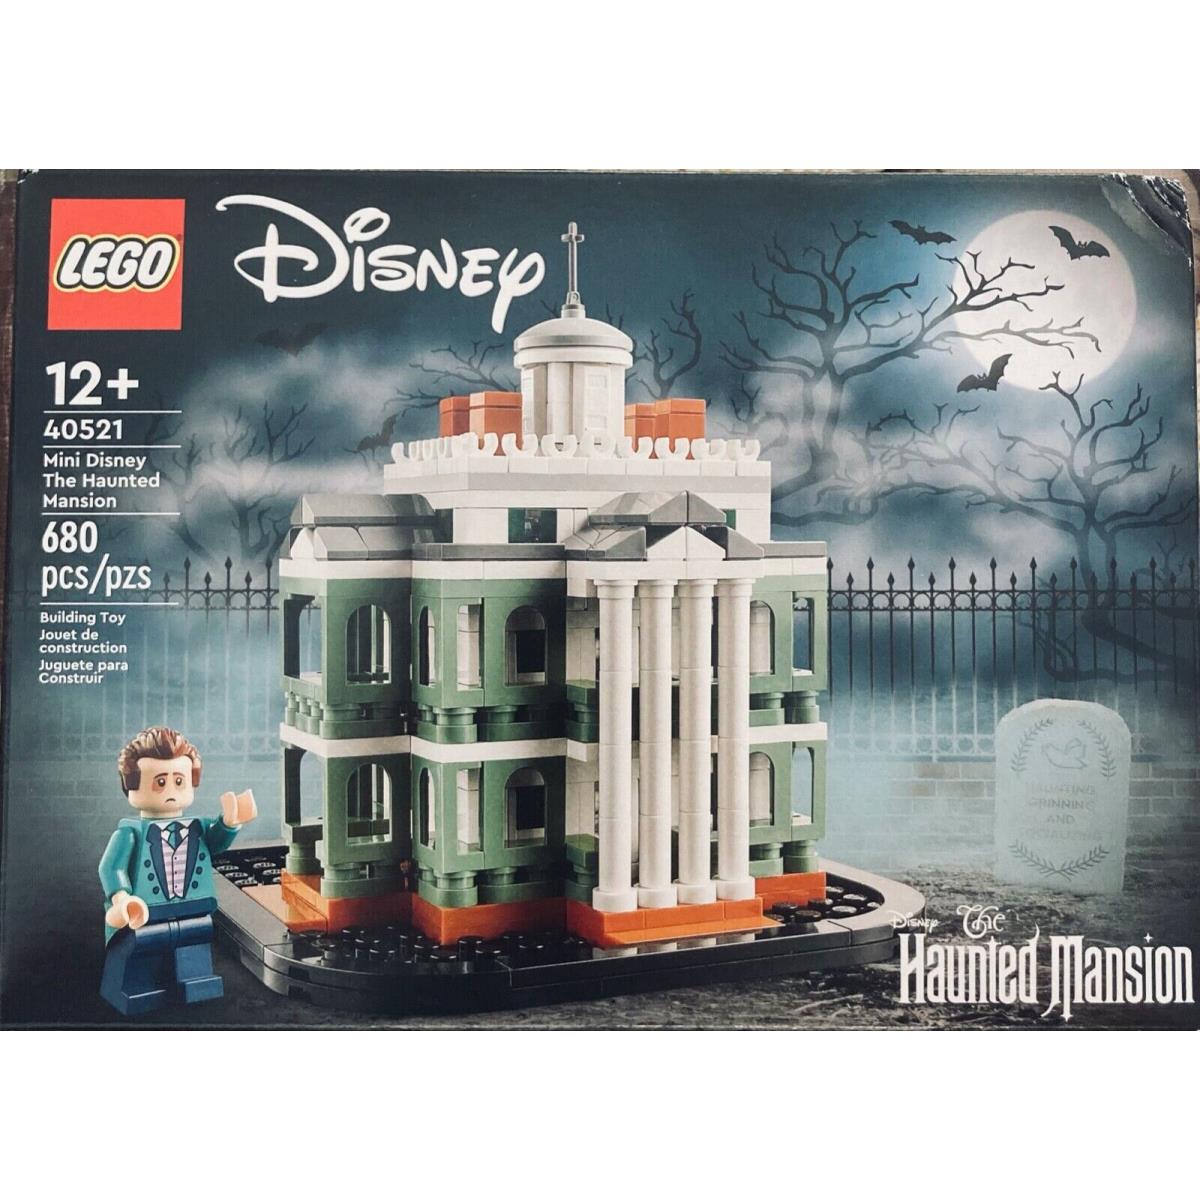 Lego Disneyland 75301 Mini Disney The Haunted Mansion 680 Pieces Toy Set